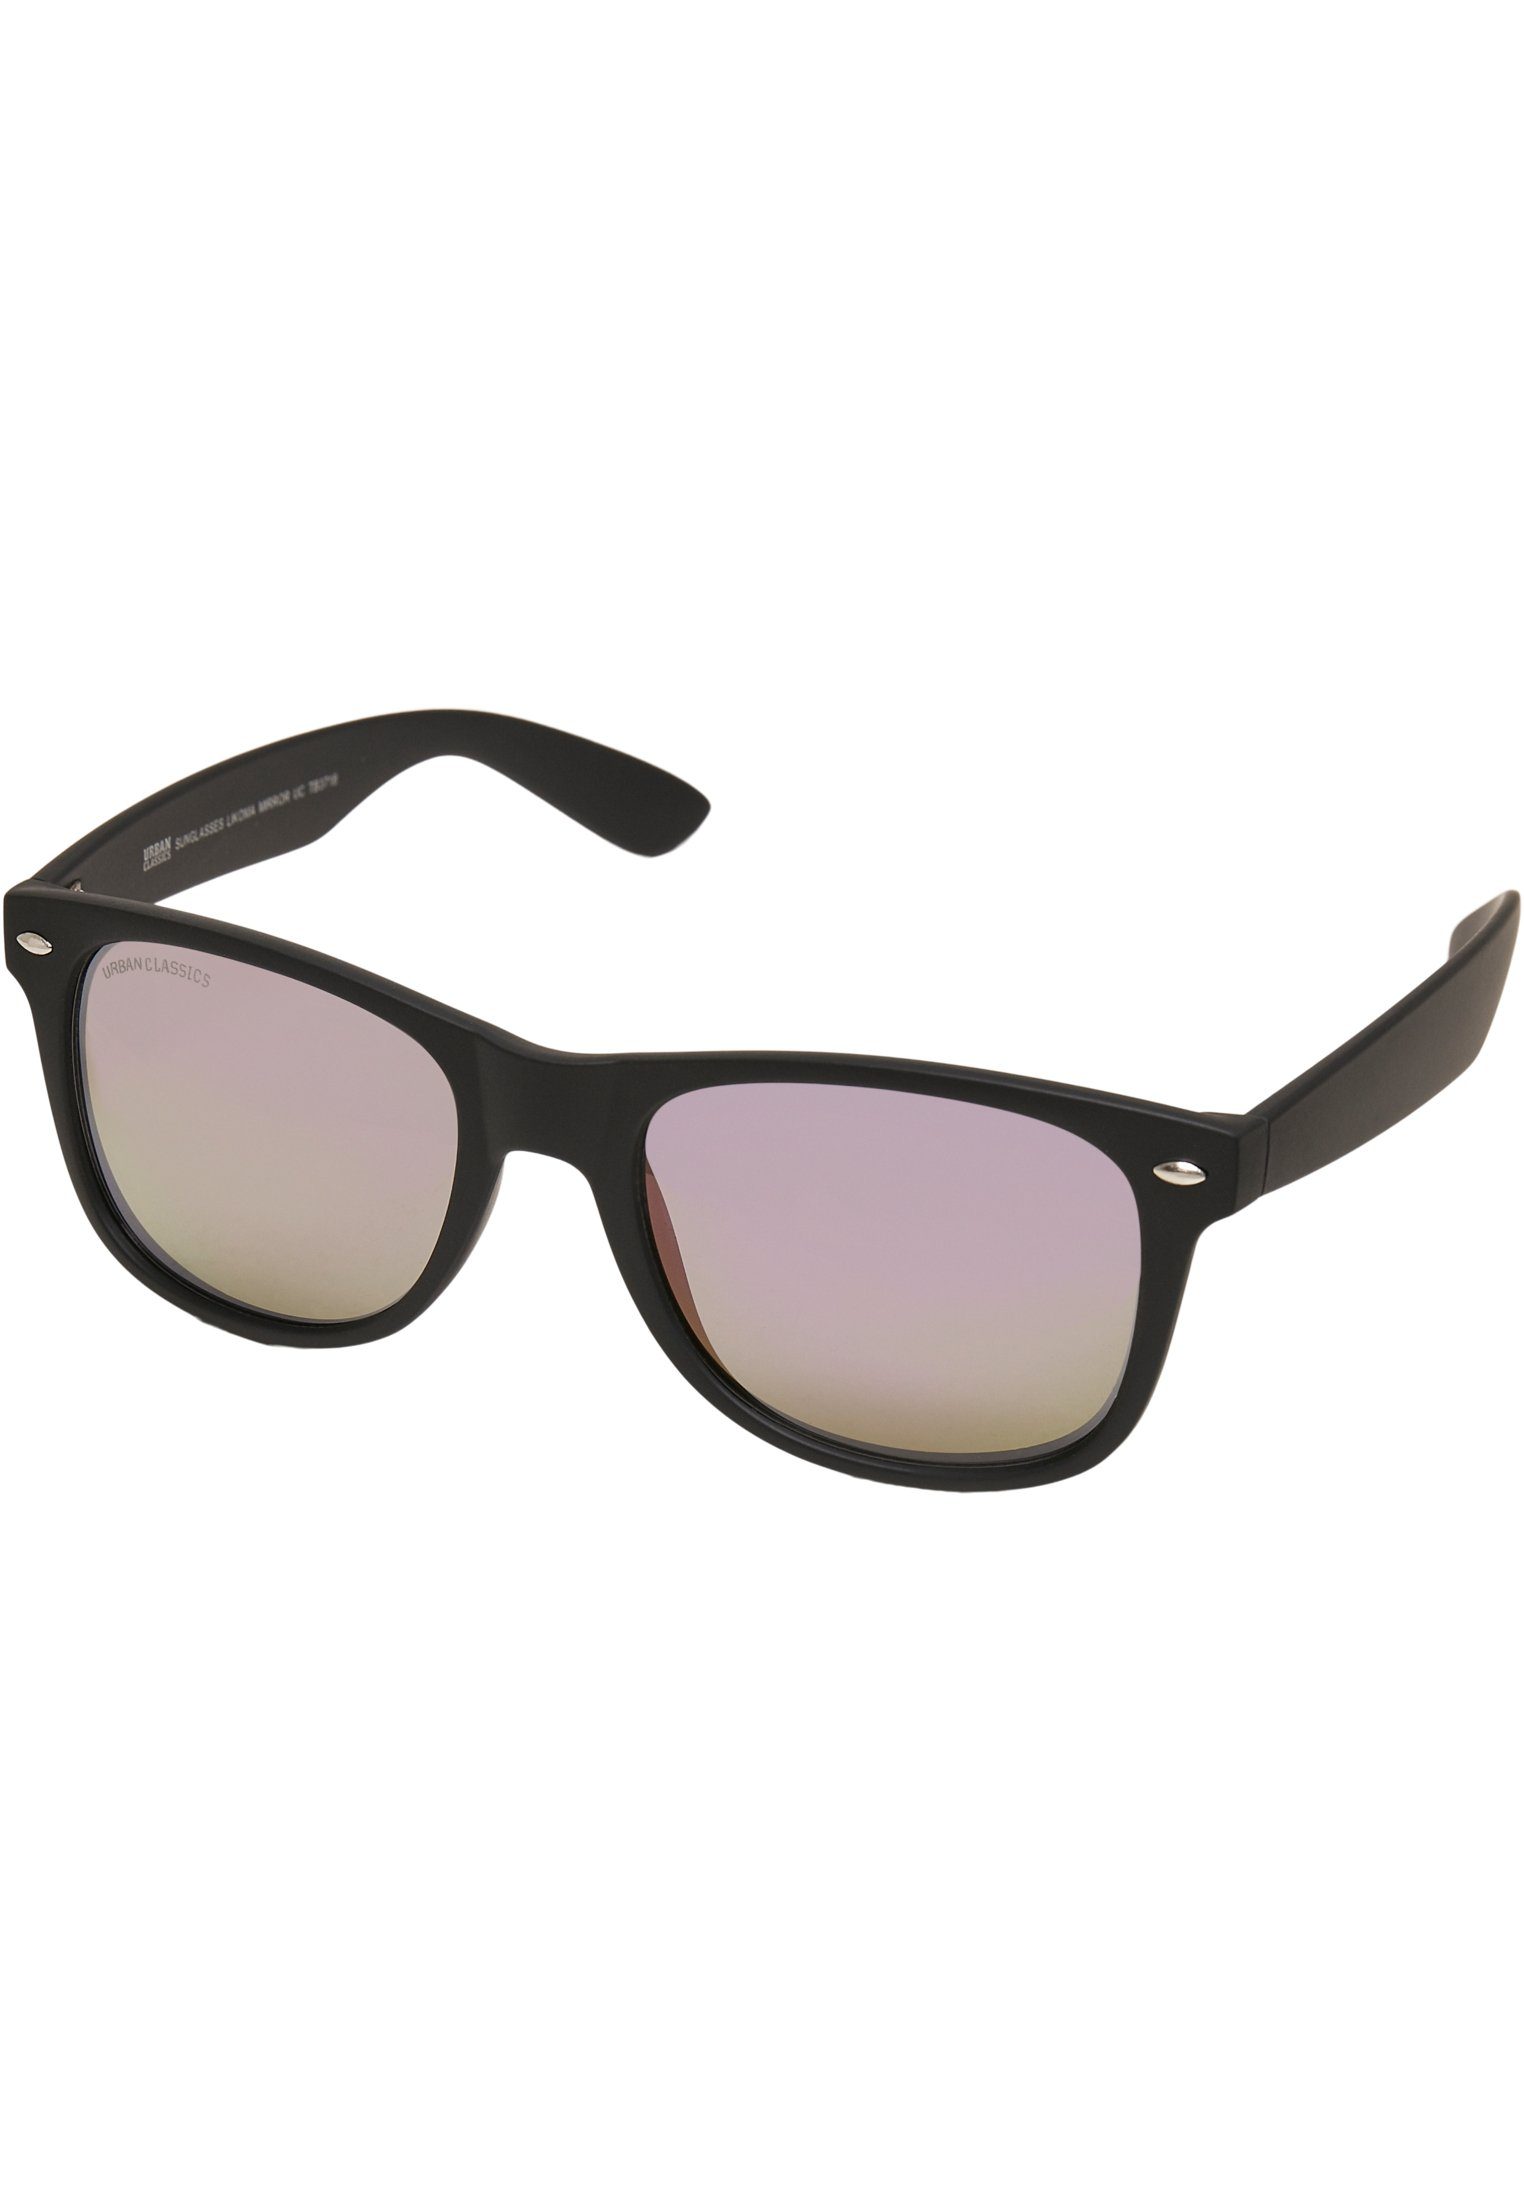 CLASSICS Mirror UC black/purple Sunglasses Sonnenbrille URBAN Accessoires Likoma